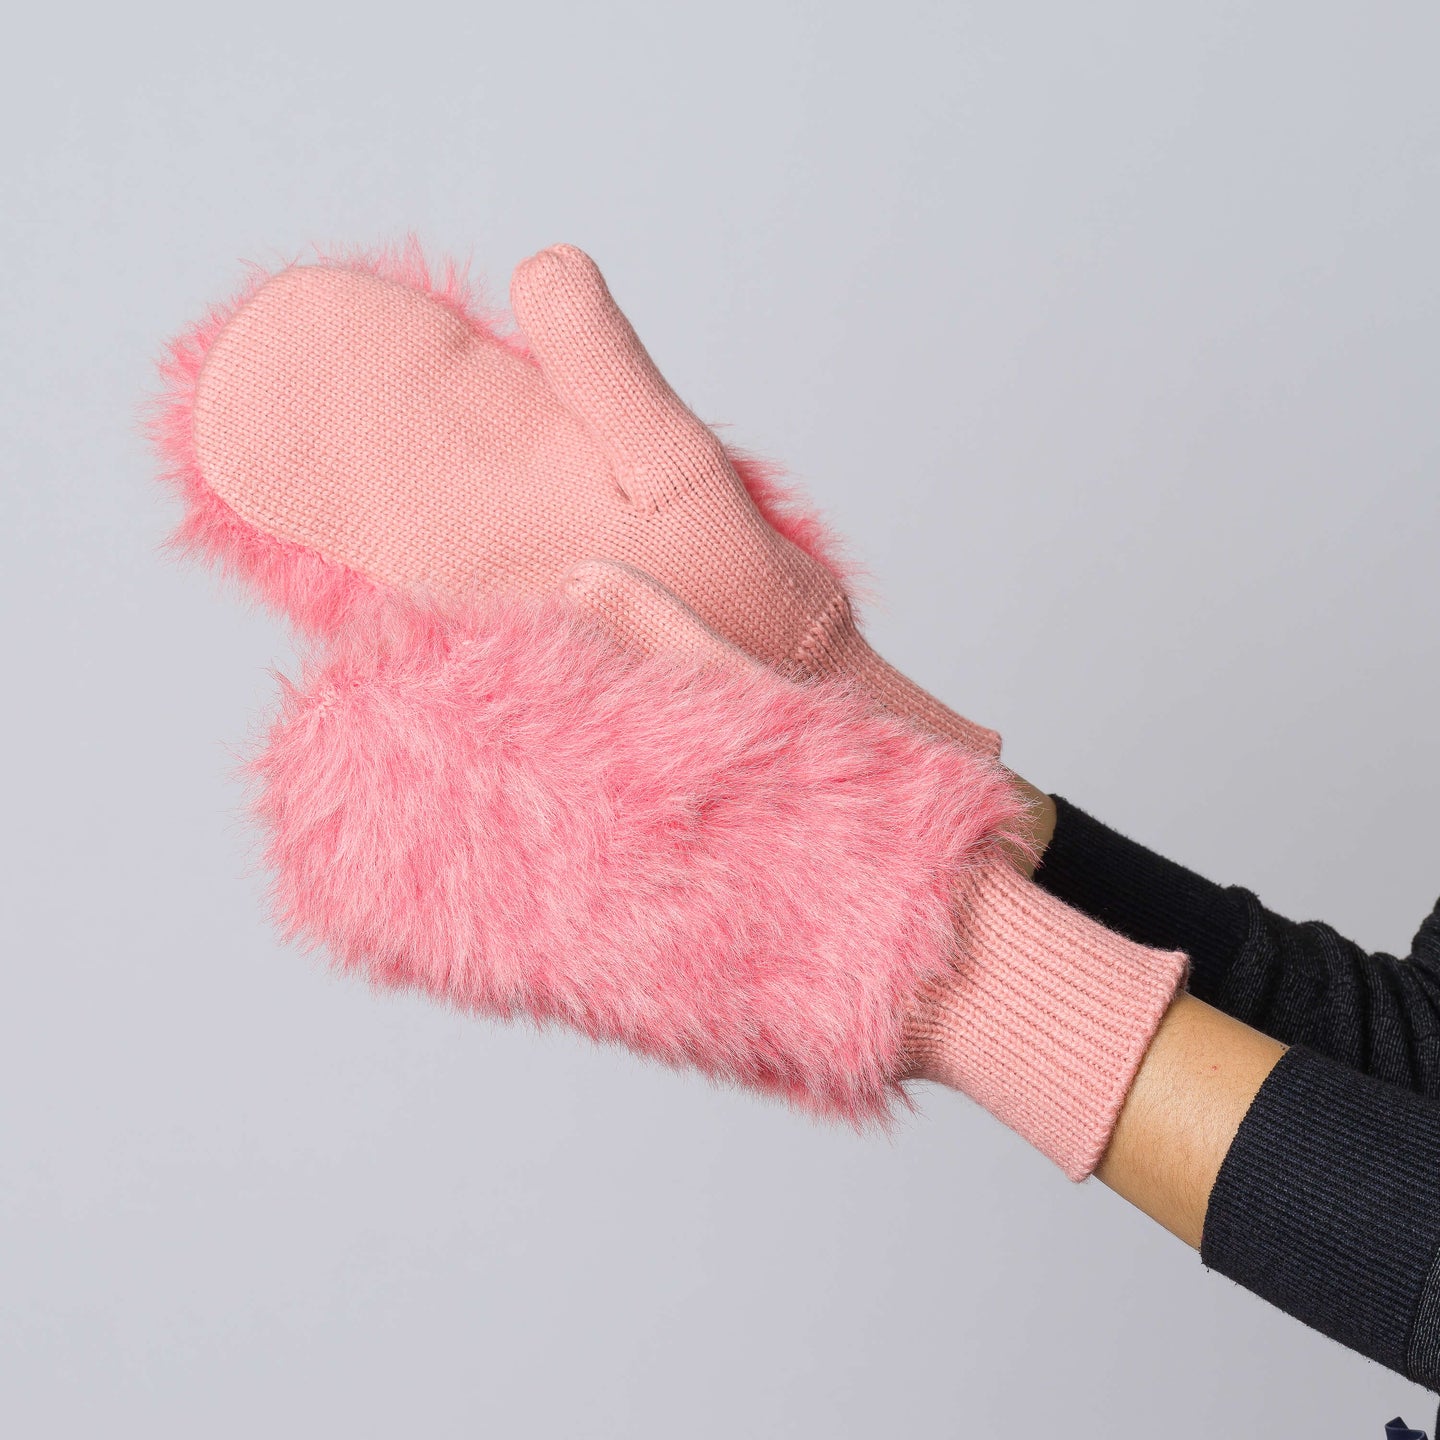 Fuzzy Faux Fur Colorblock Knit Mittens On Model Wearing Hands Vegan Gloves